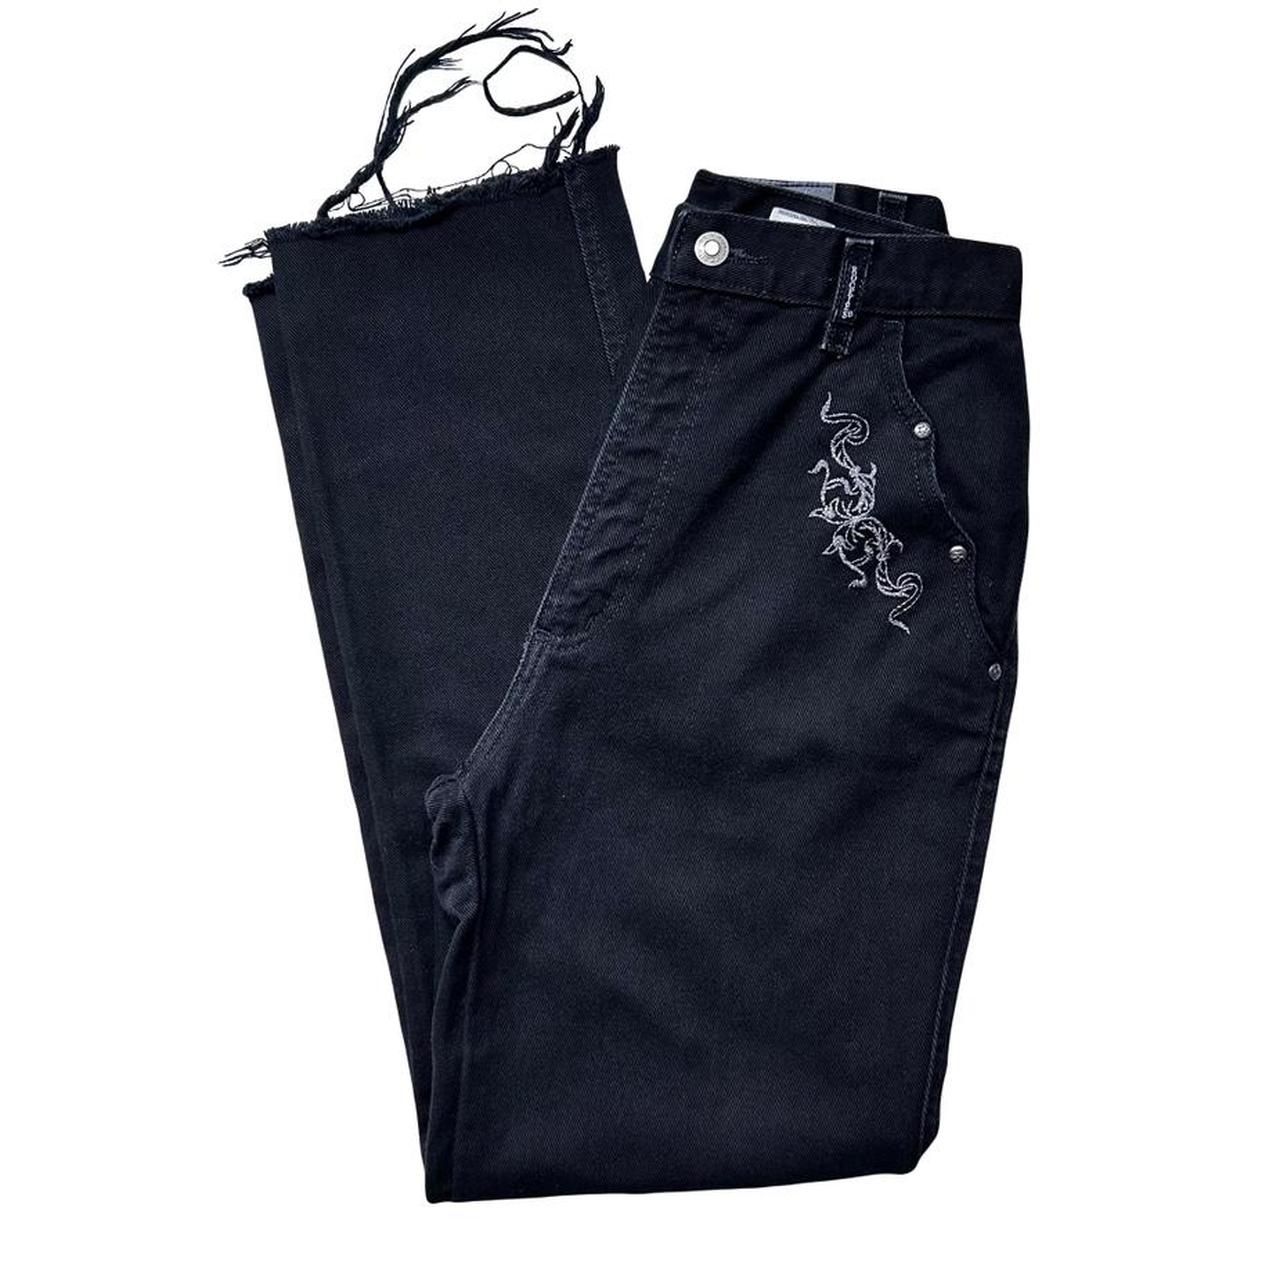 Rockies Women's Straight Leg Embroidered Pants - Black - 4